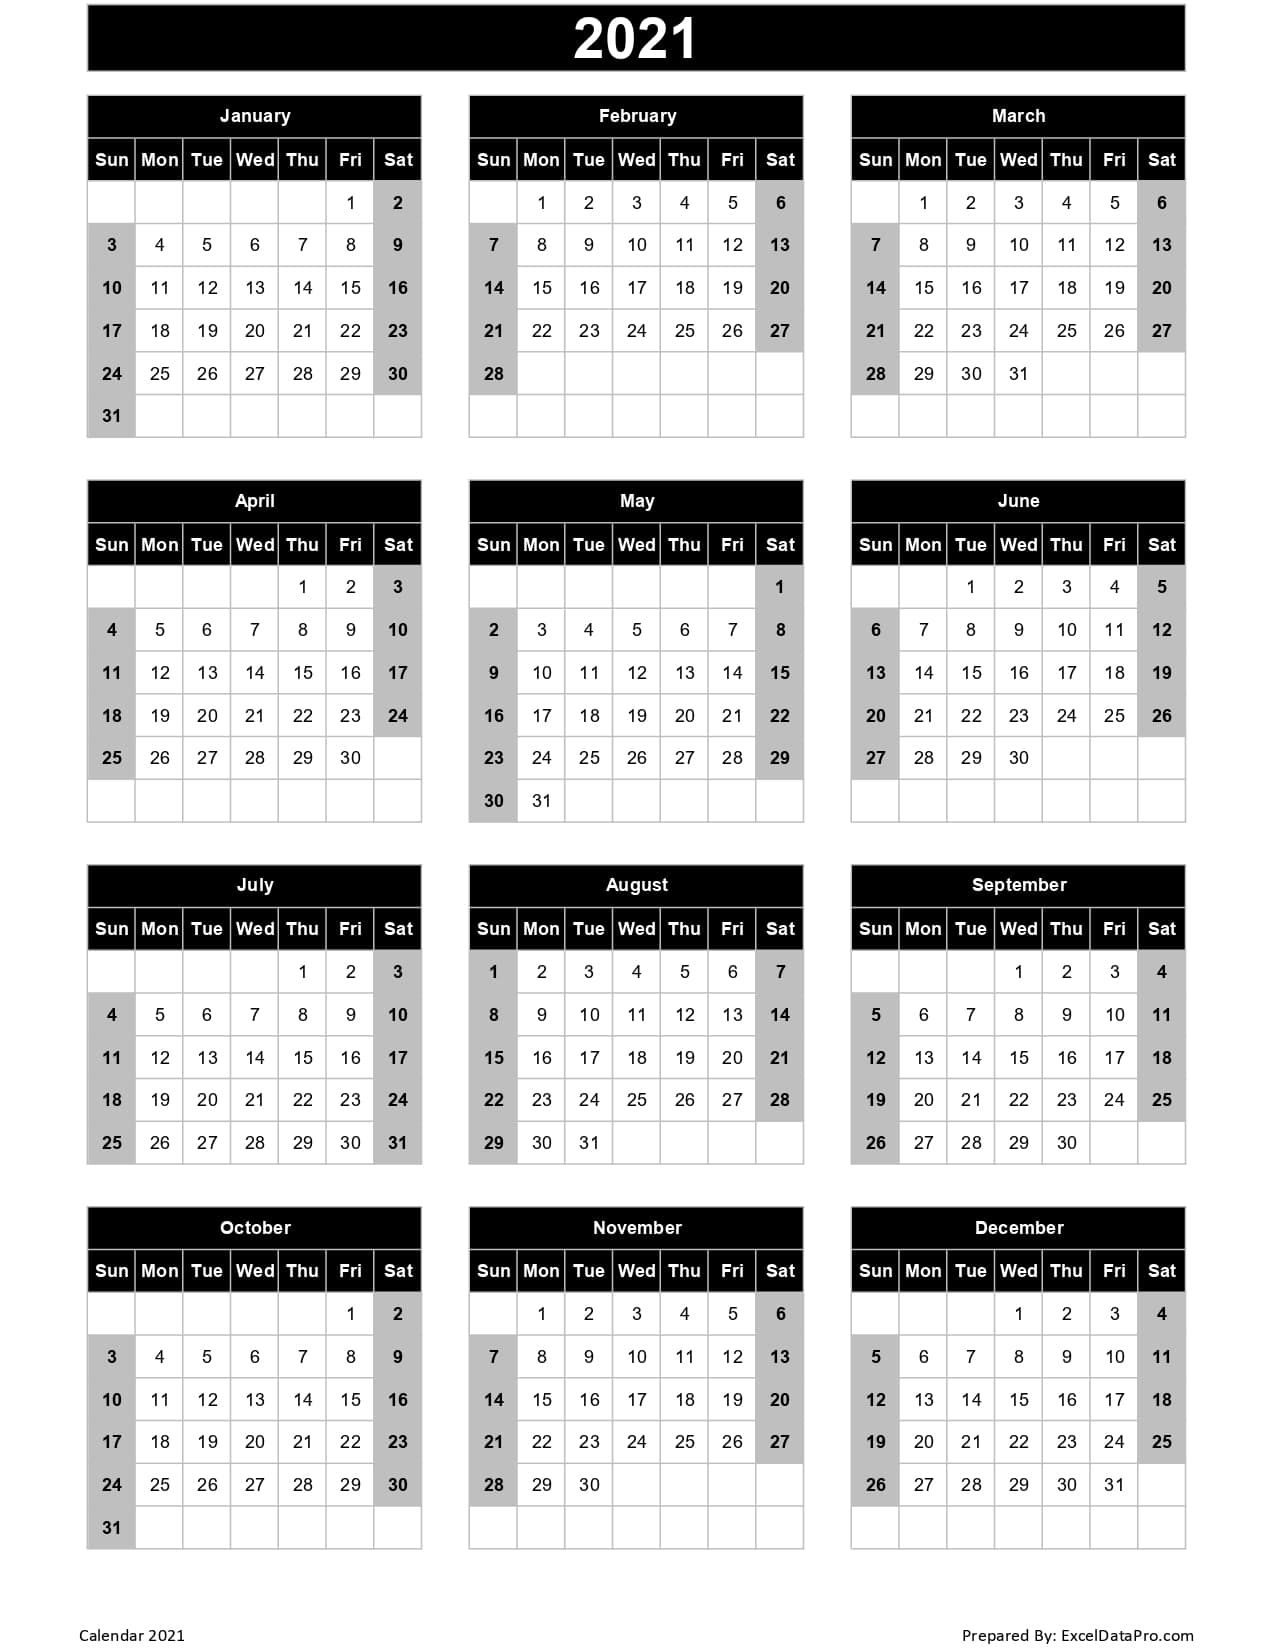 calendar 2021 excel templates, printable pdfs &amp; images